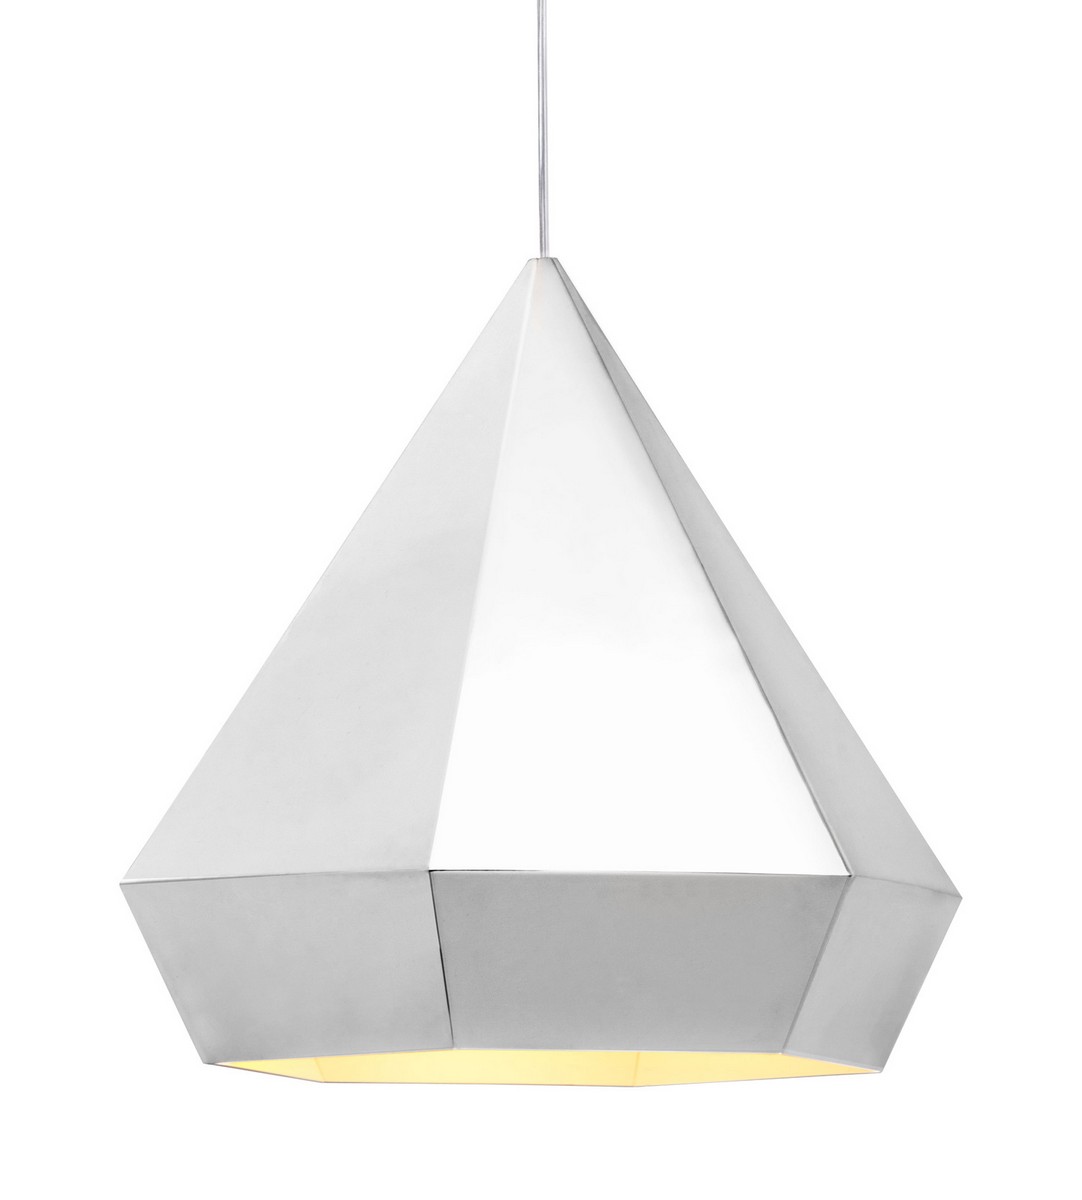 Zuo Modern Forecast Ceiling Lamp - Chrome